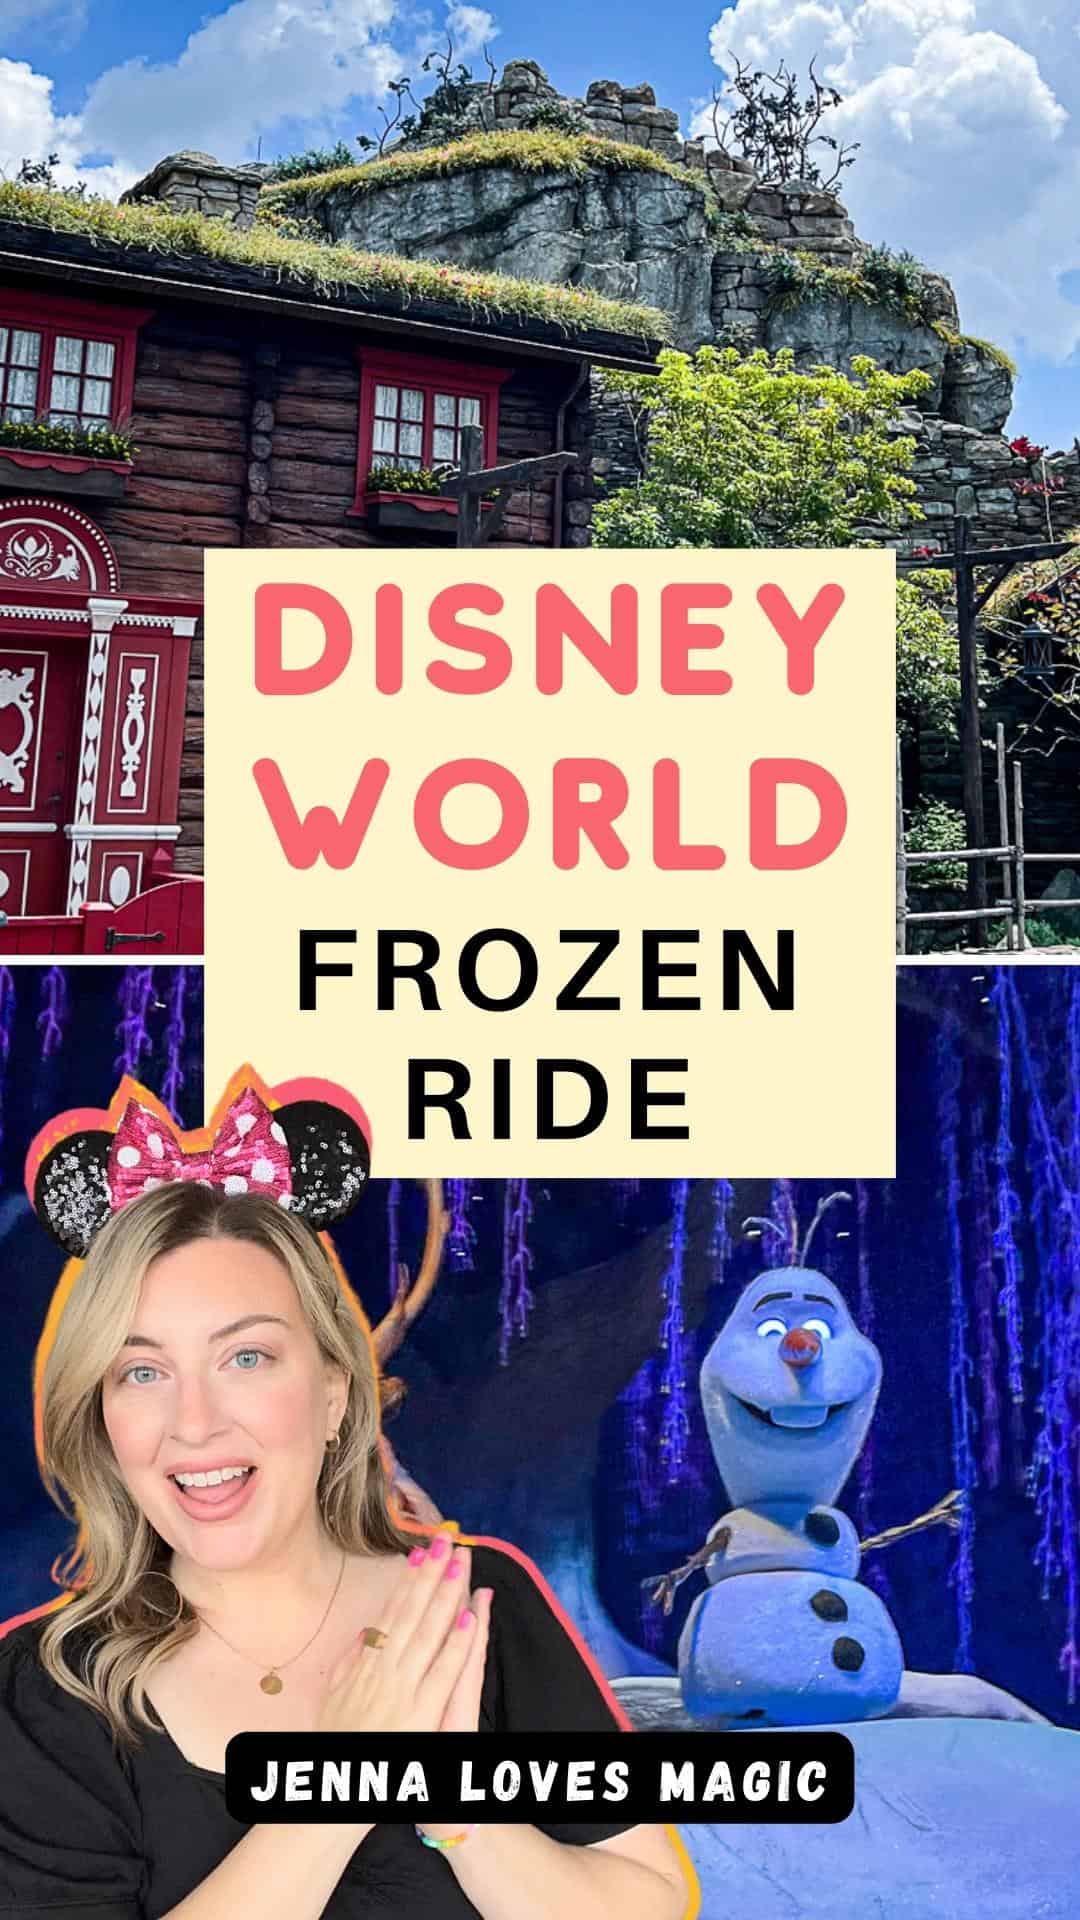 Epcot Disney World Frozen Ride text overlay with Jenna Loves Magic logo